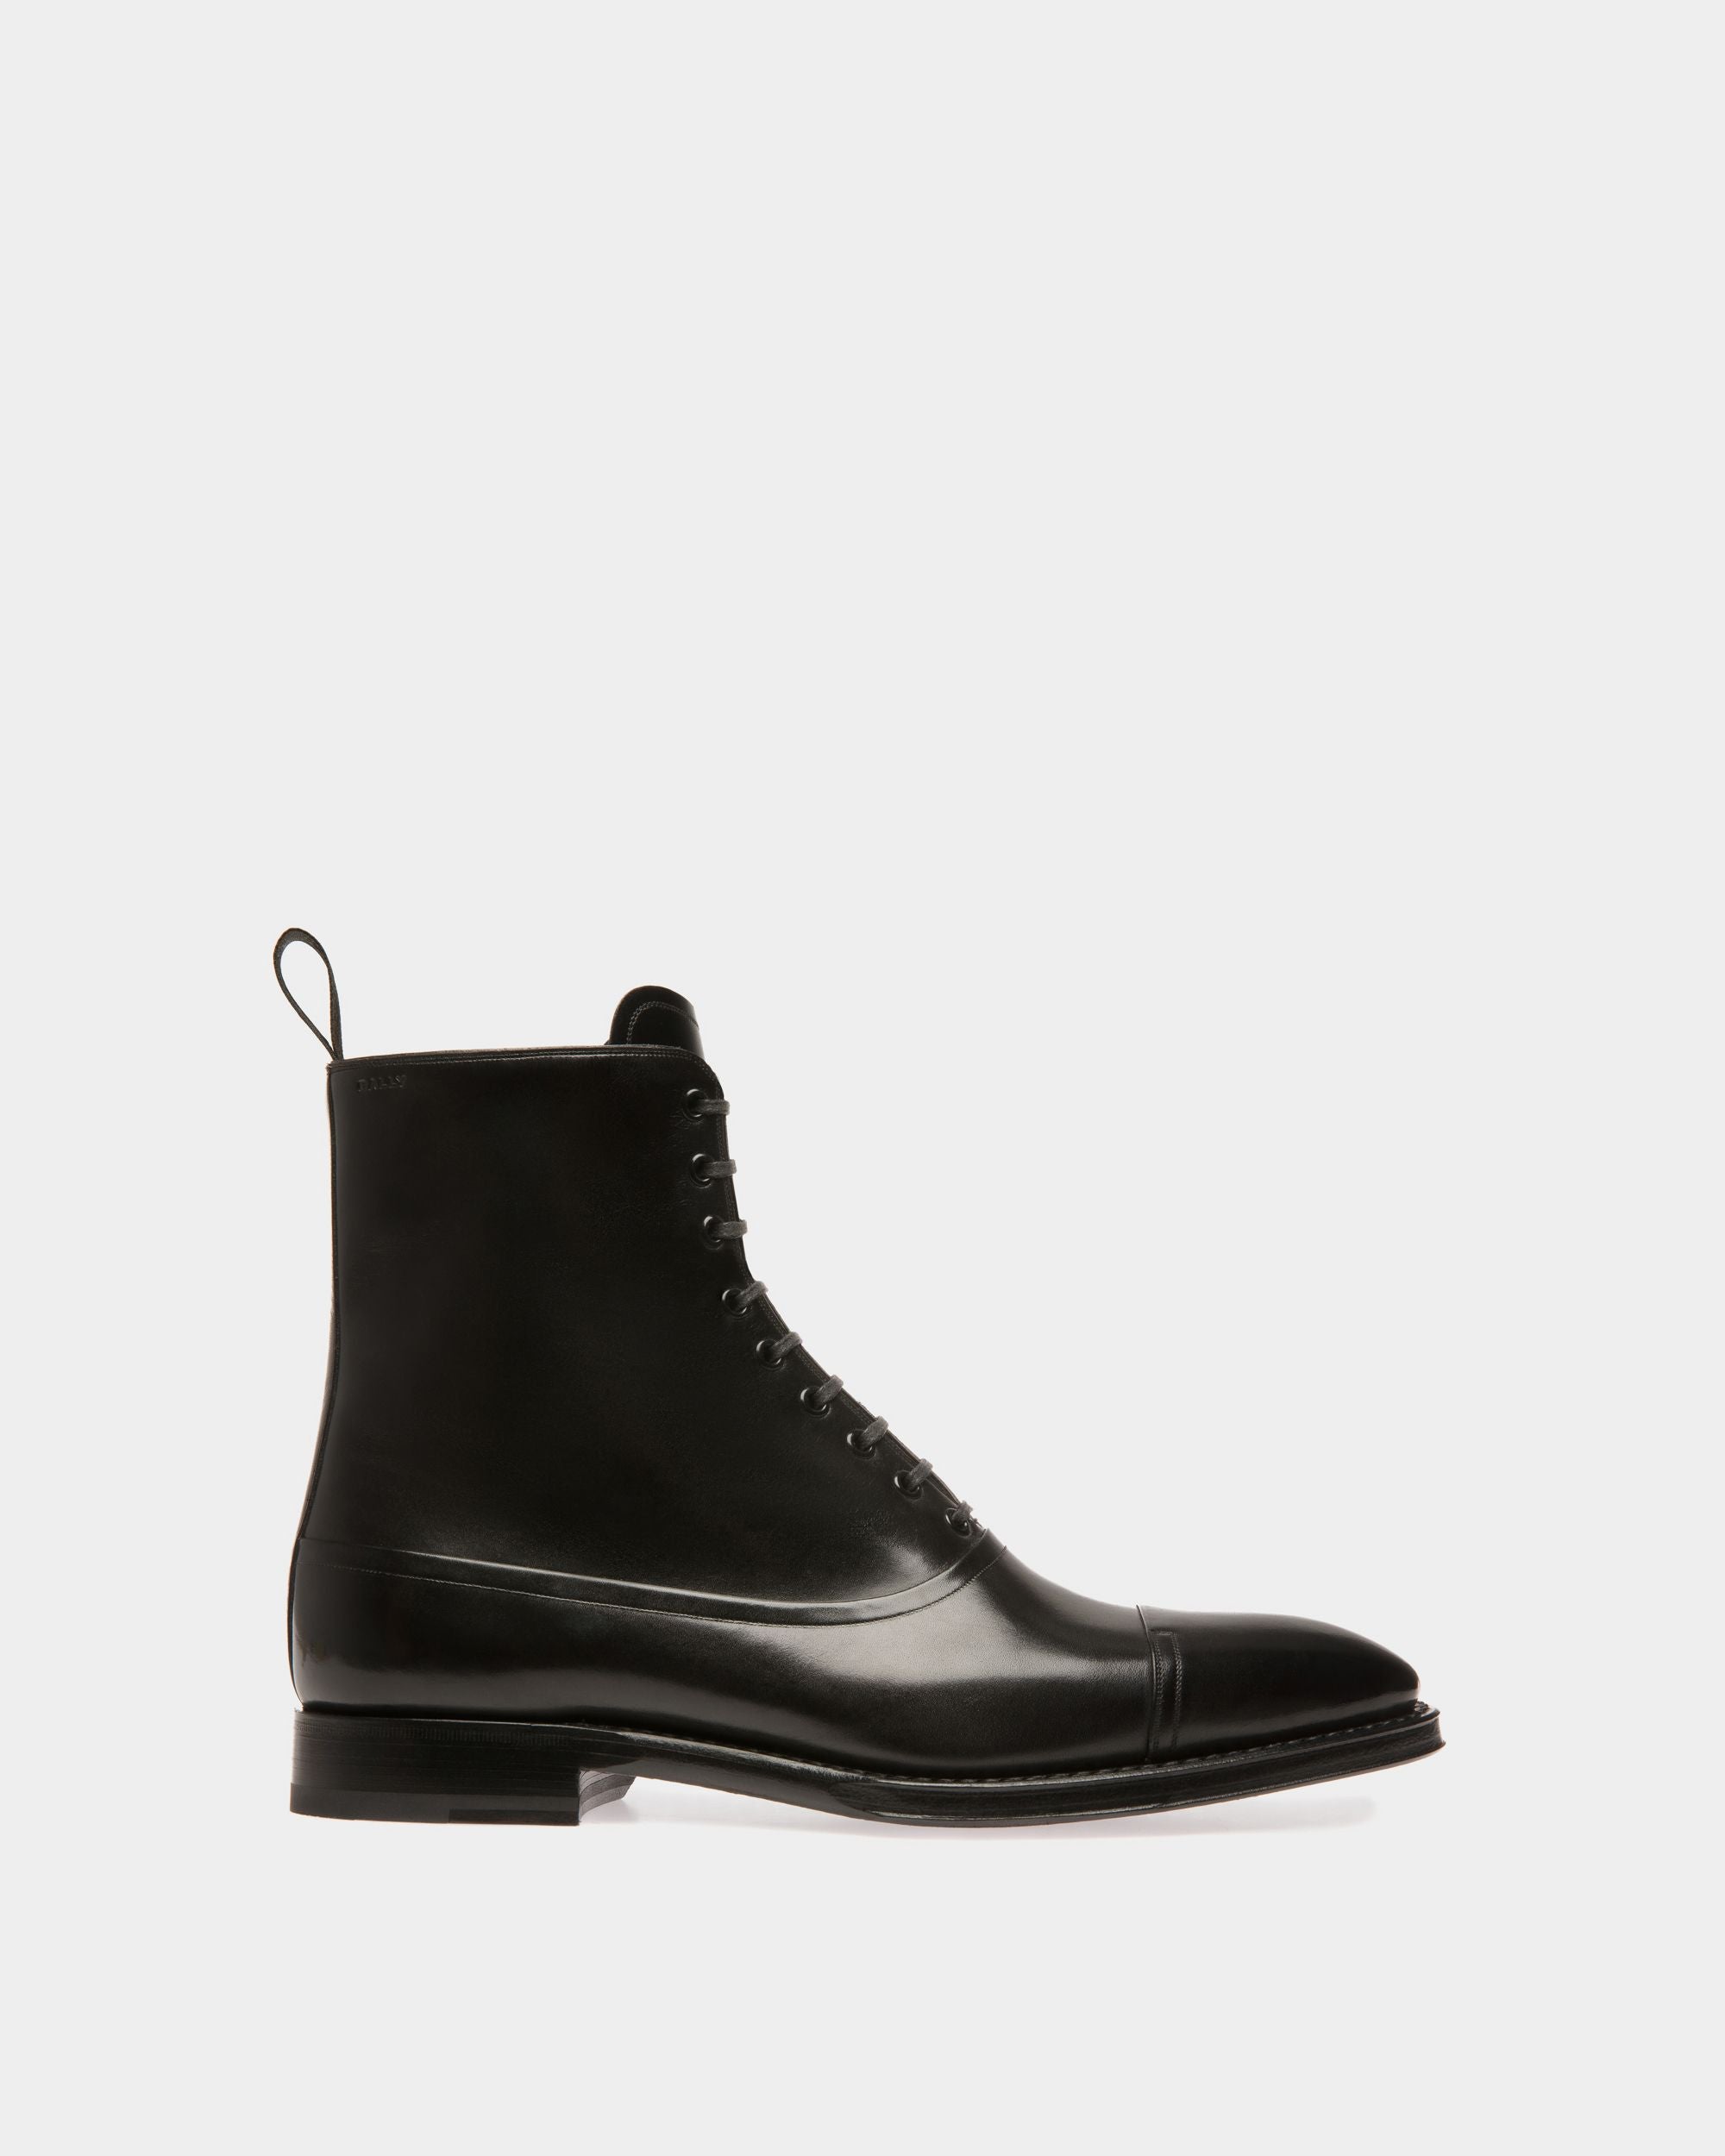 Salvi | Men's Boots | Black Leather | Bally | Still Life Side